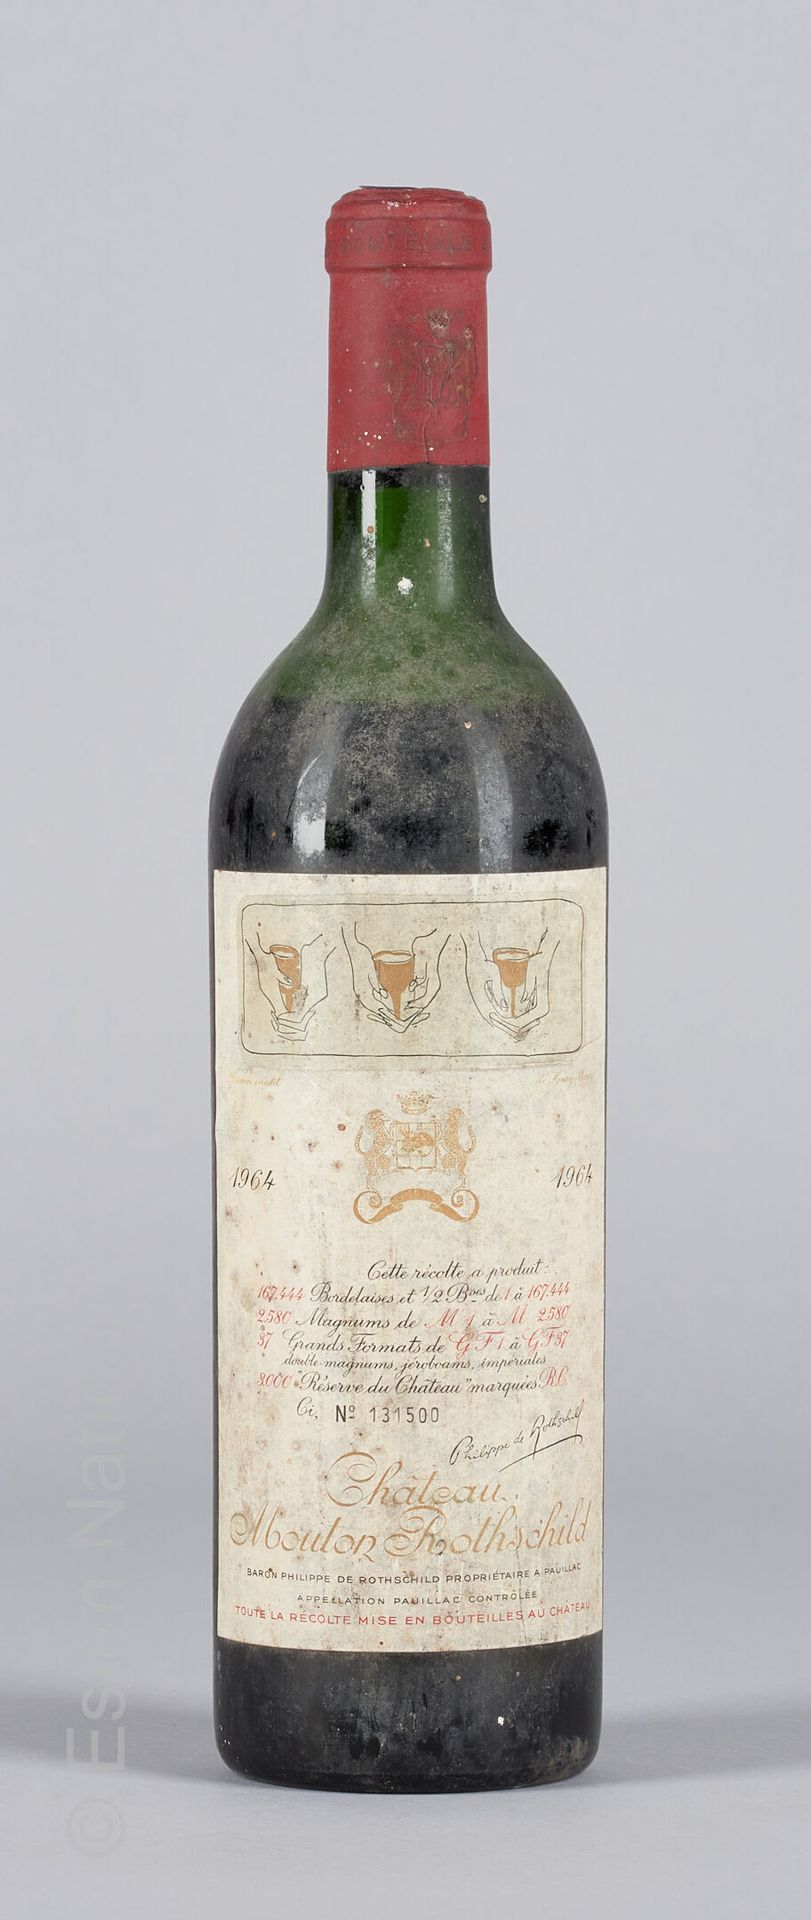 BORDEAUX 1 bottiglia Château Mouton Rothschild 1964 1er GCC Pauillac

(N. Me, E.&hellip;